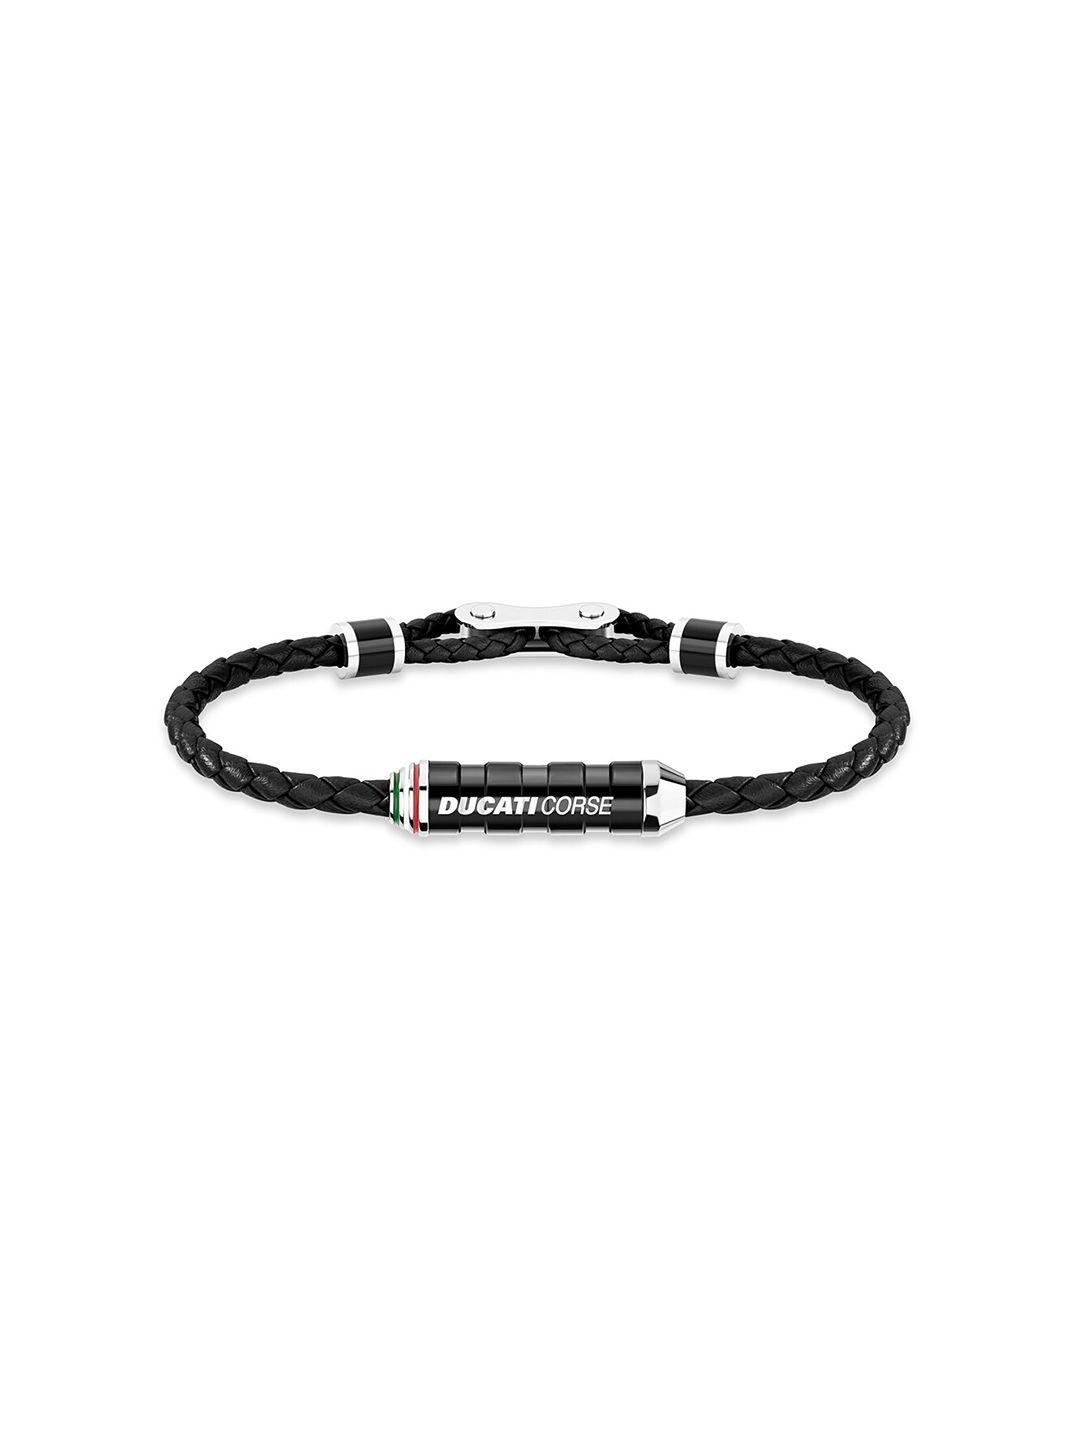 ducati corse men silver-toned & black braided bracelet